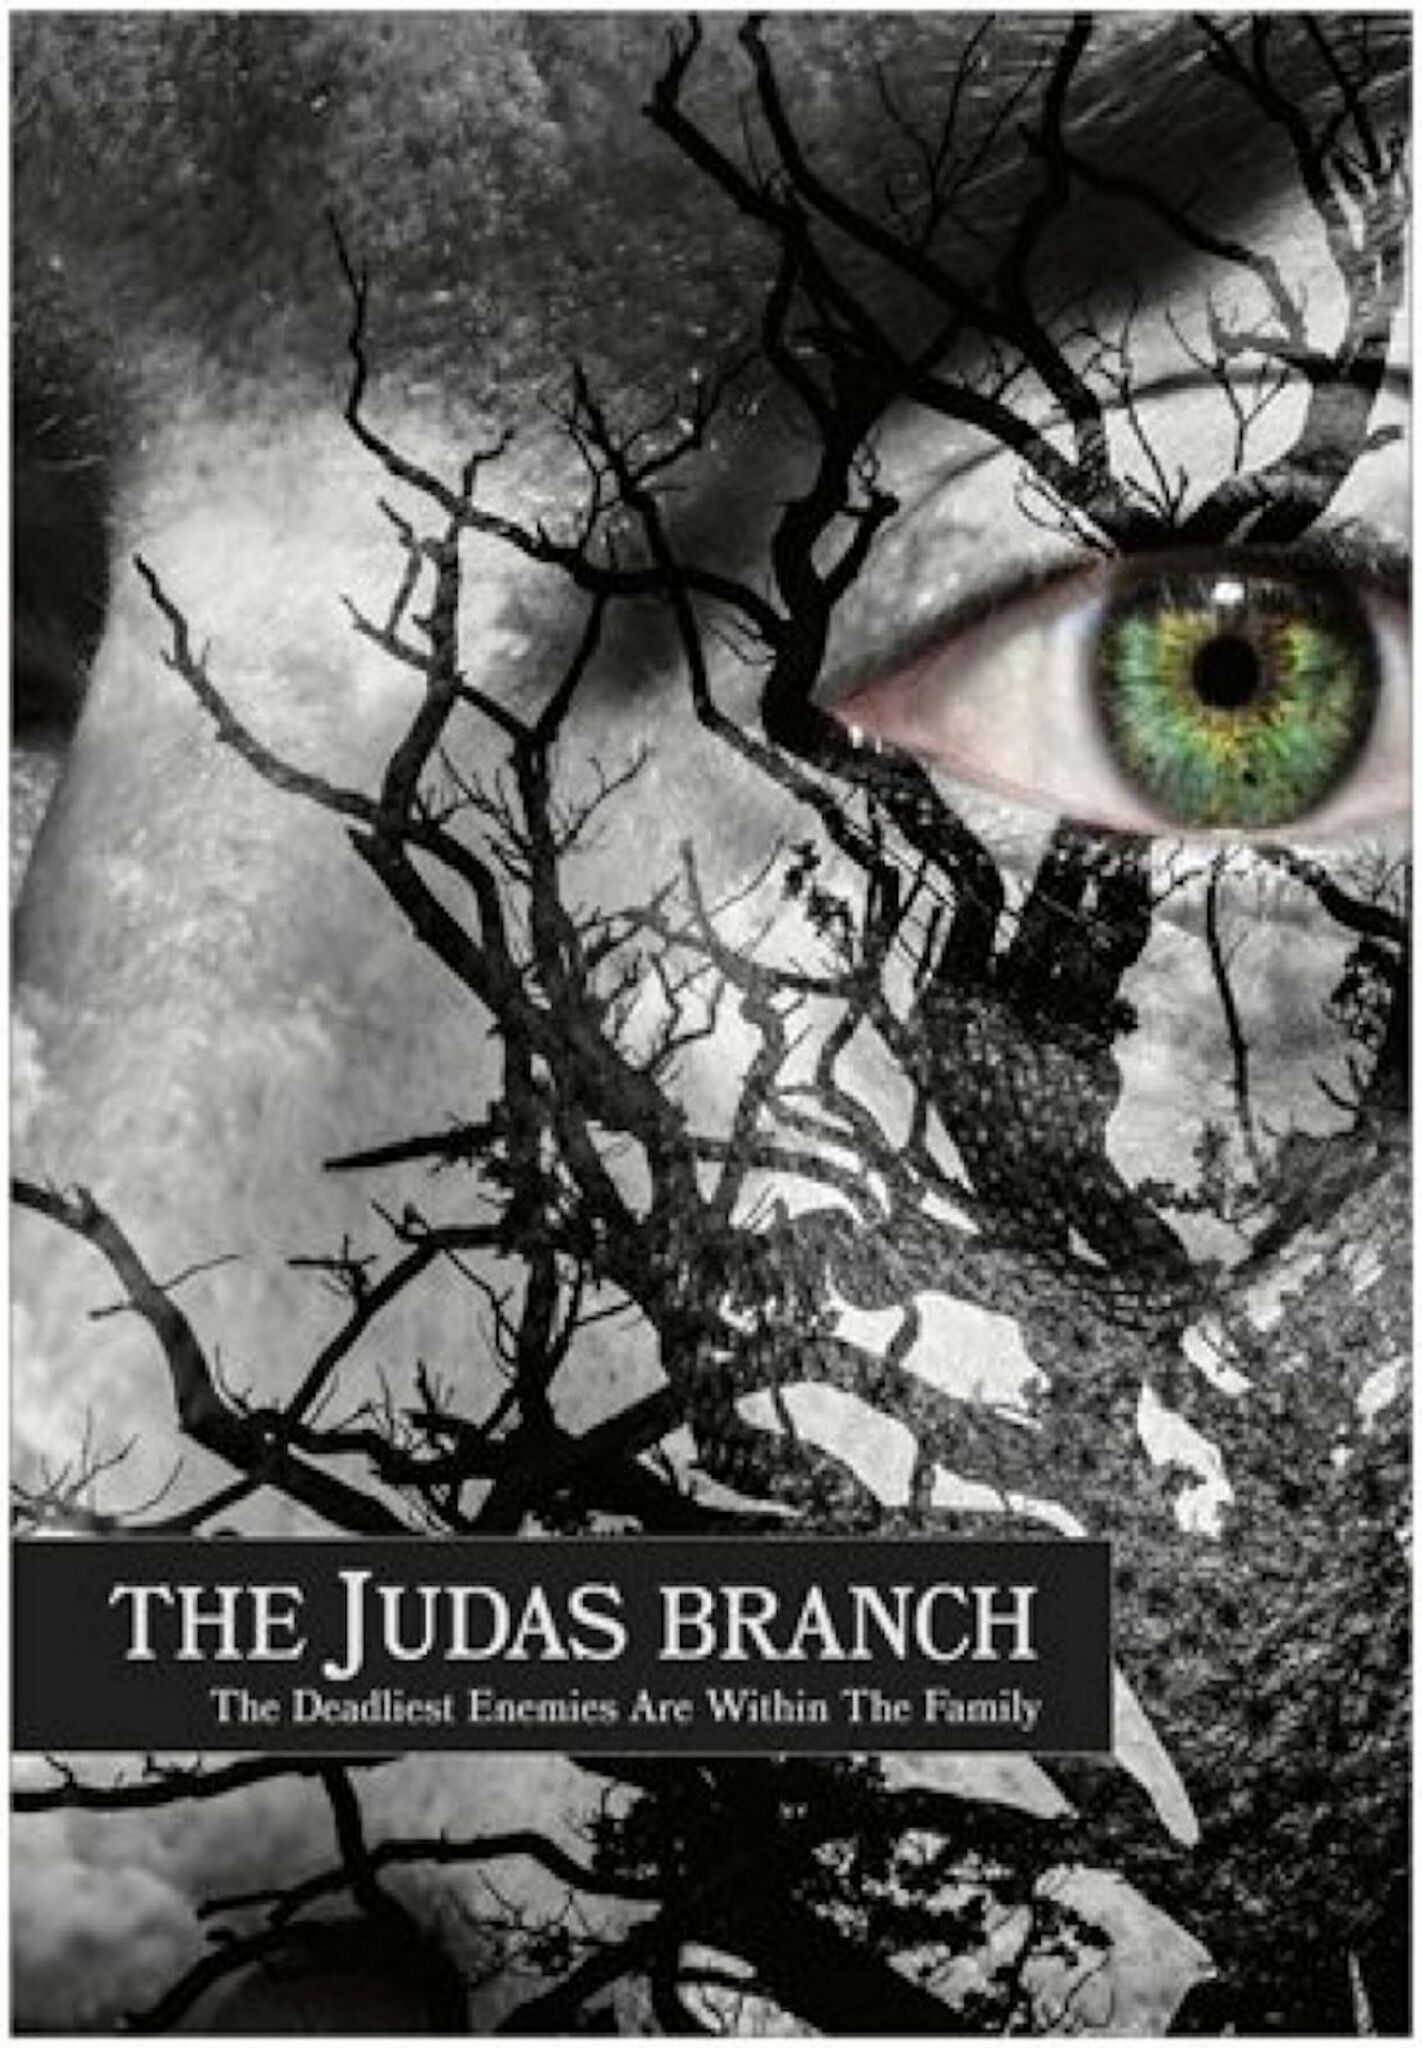 THE JUDAS BRANCH